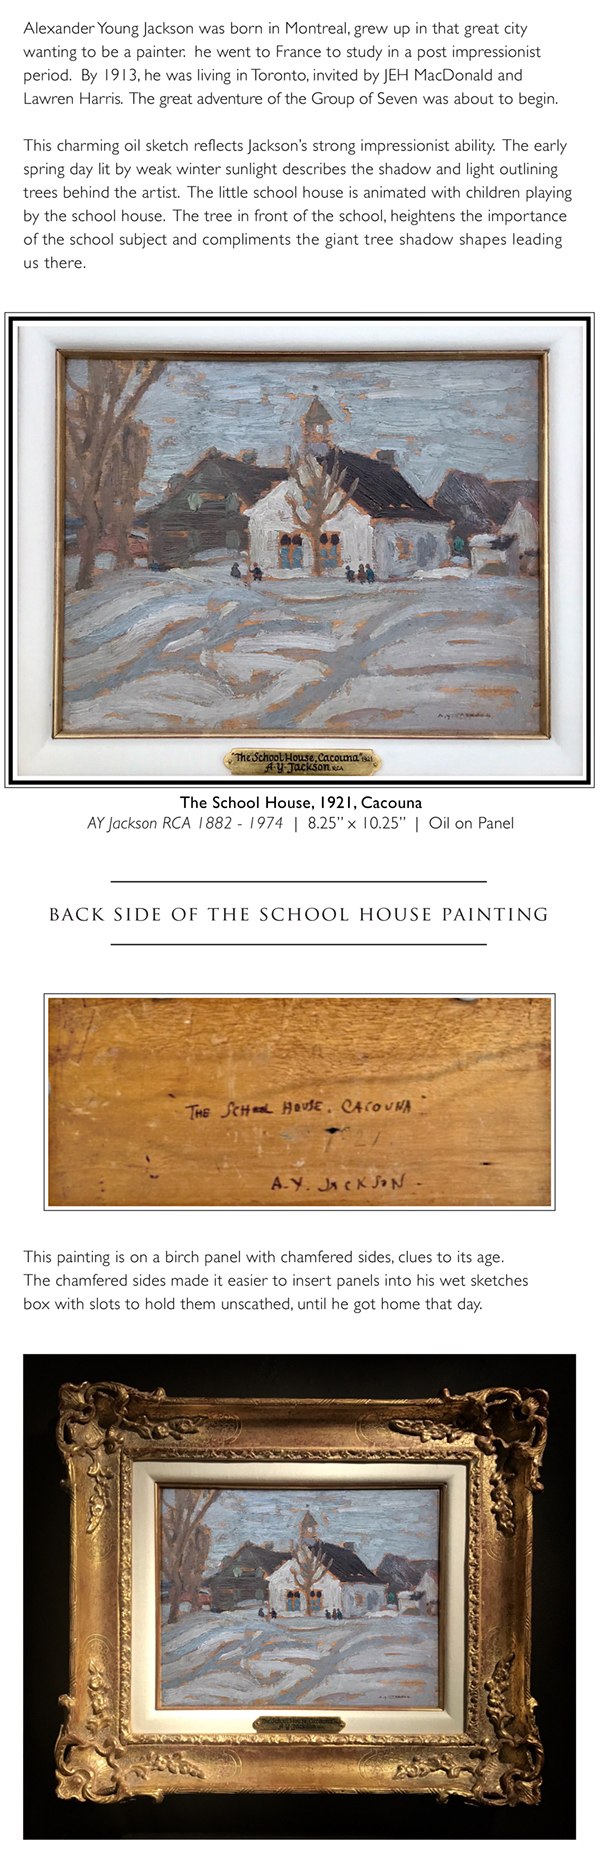 A.Y. Jackson - Sketching the Schoolhouse